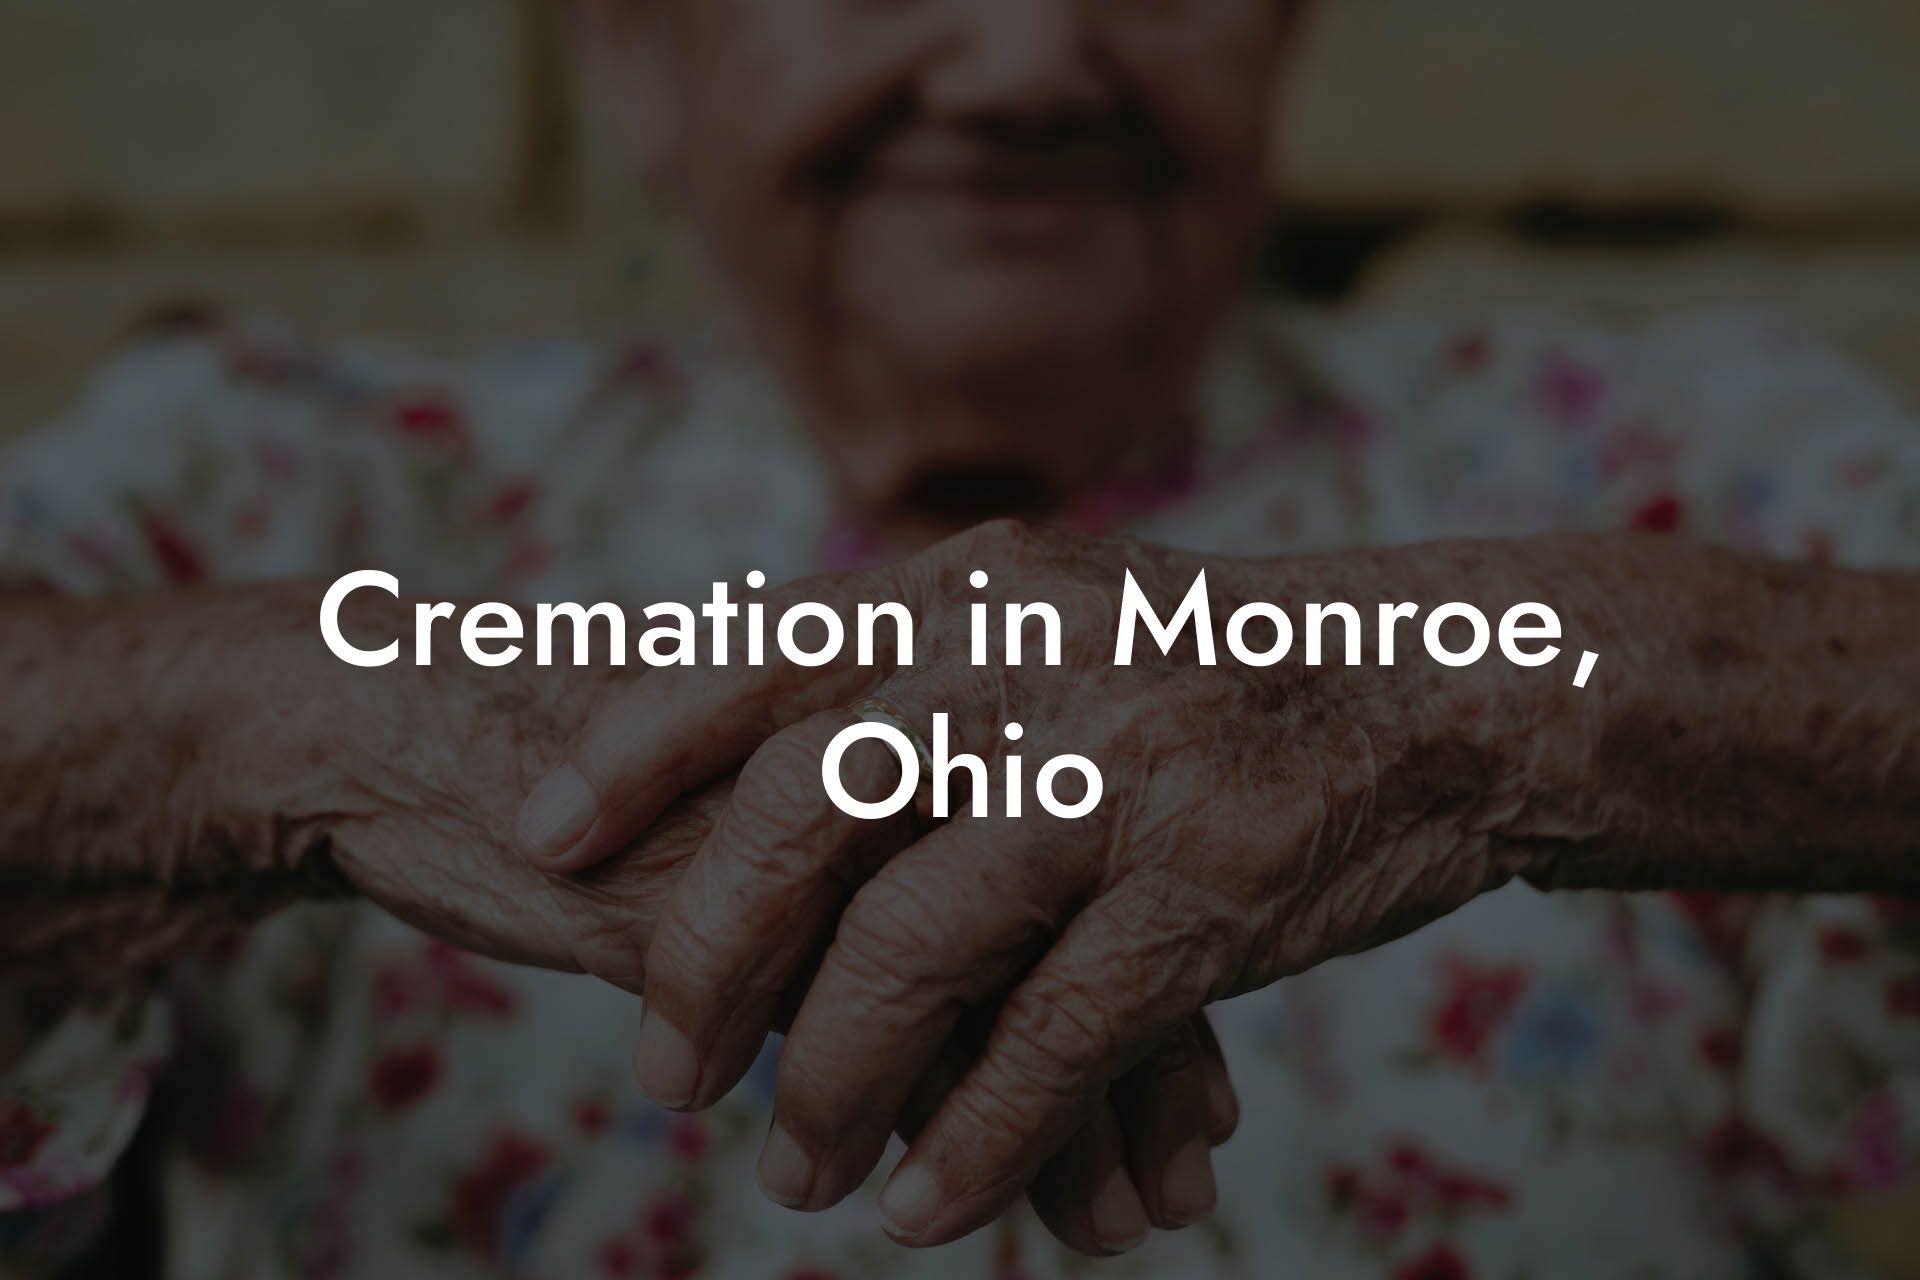 Cremation in Monroe, Ohio